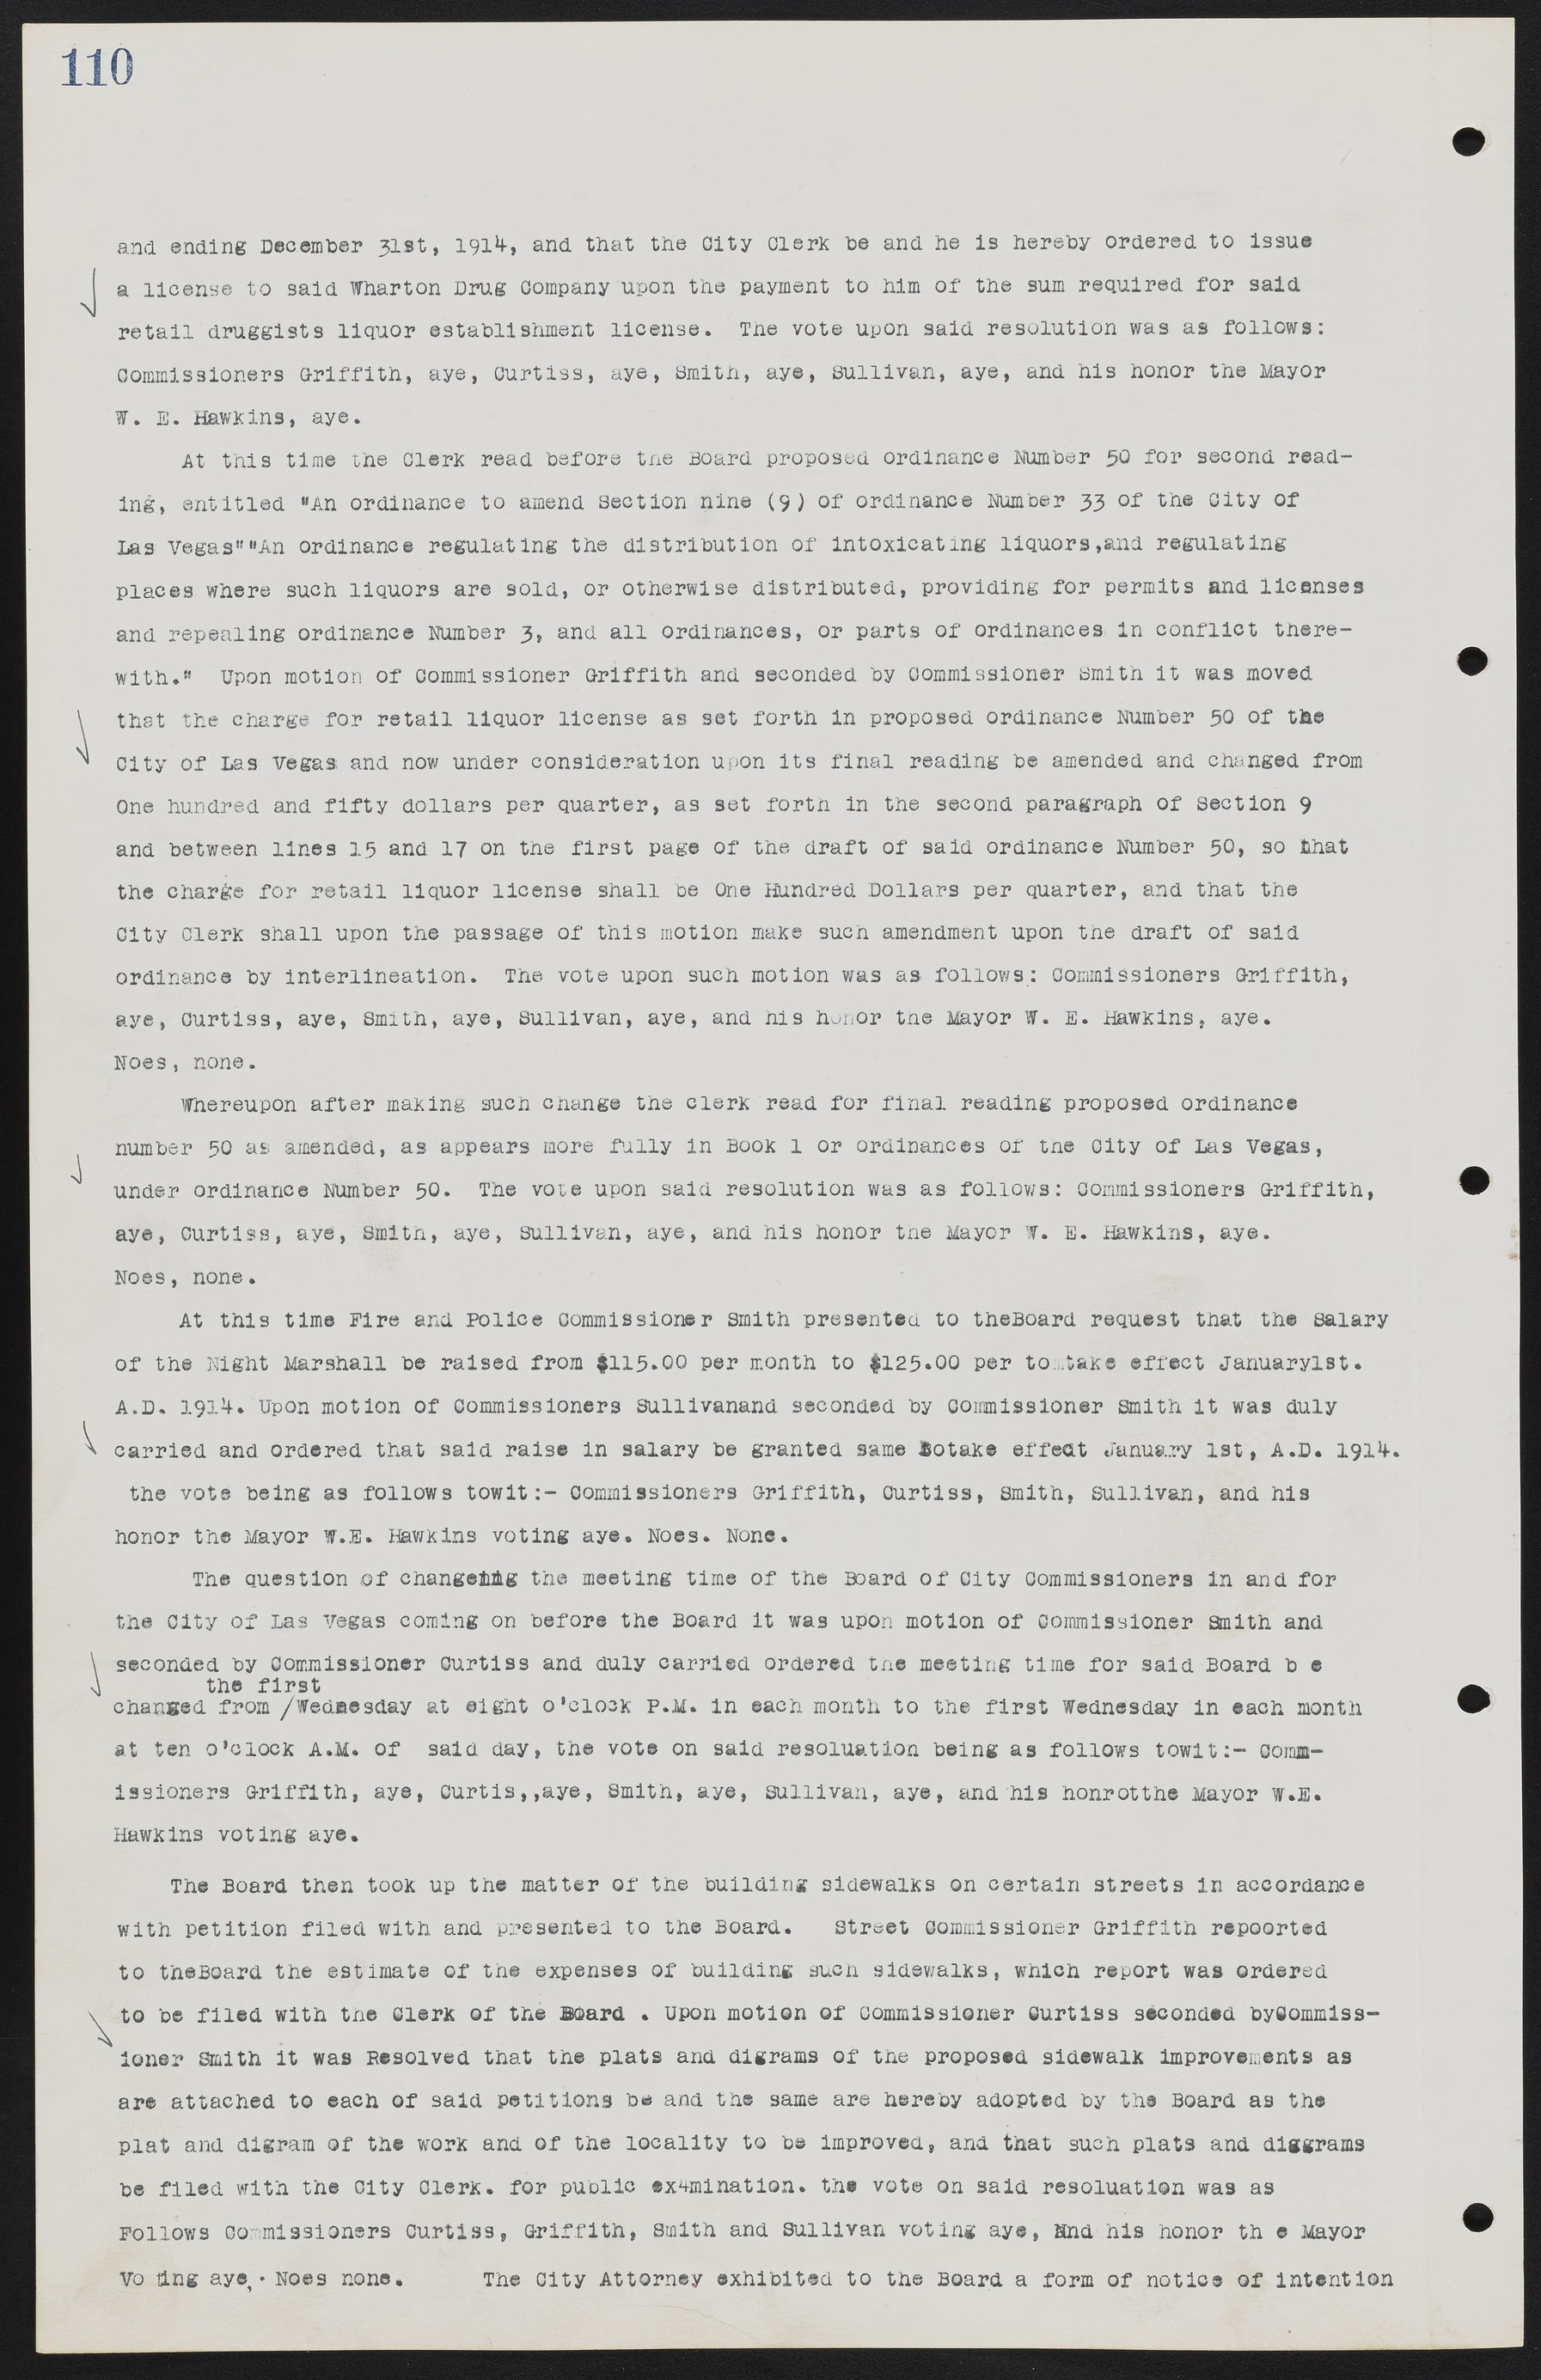 Las Vegas City Commission Minutes, June 22, 1911 to February 7, 1922, lvc000001-124